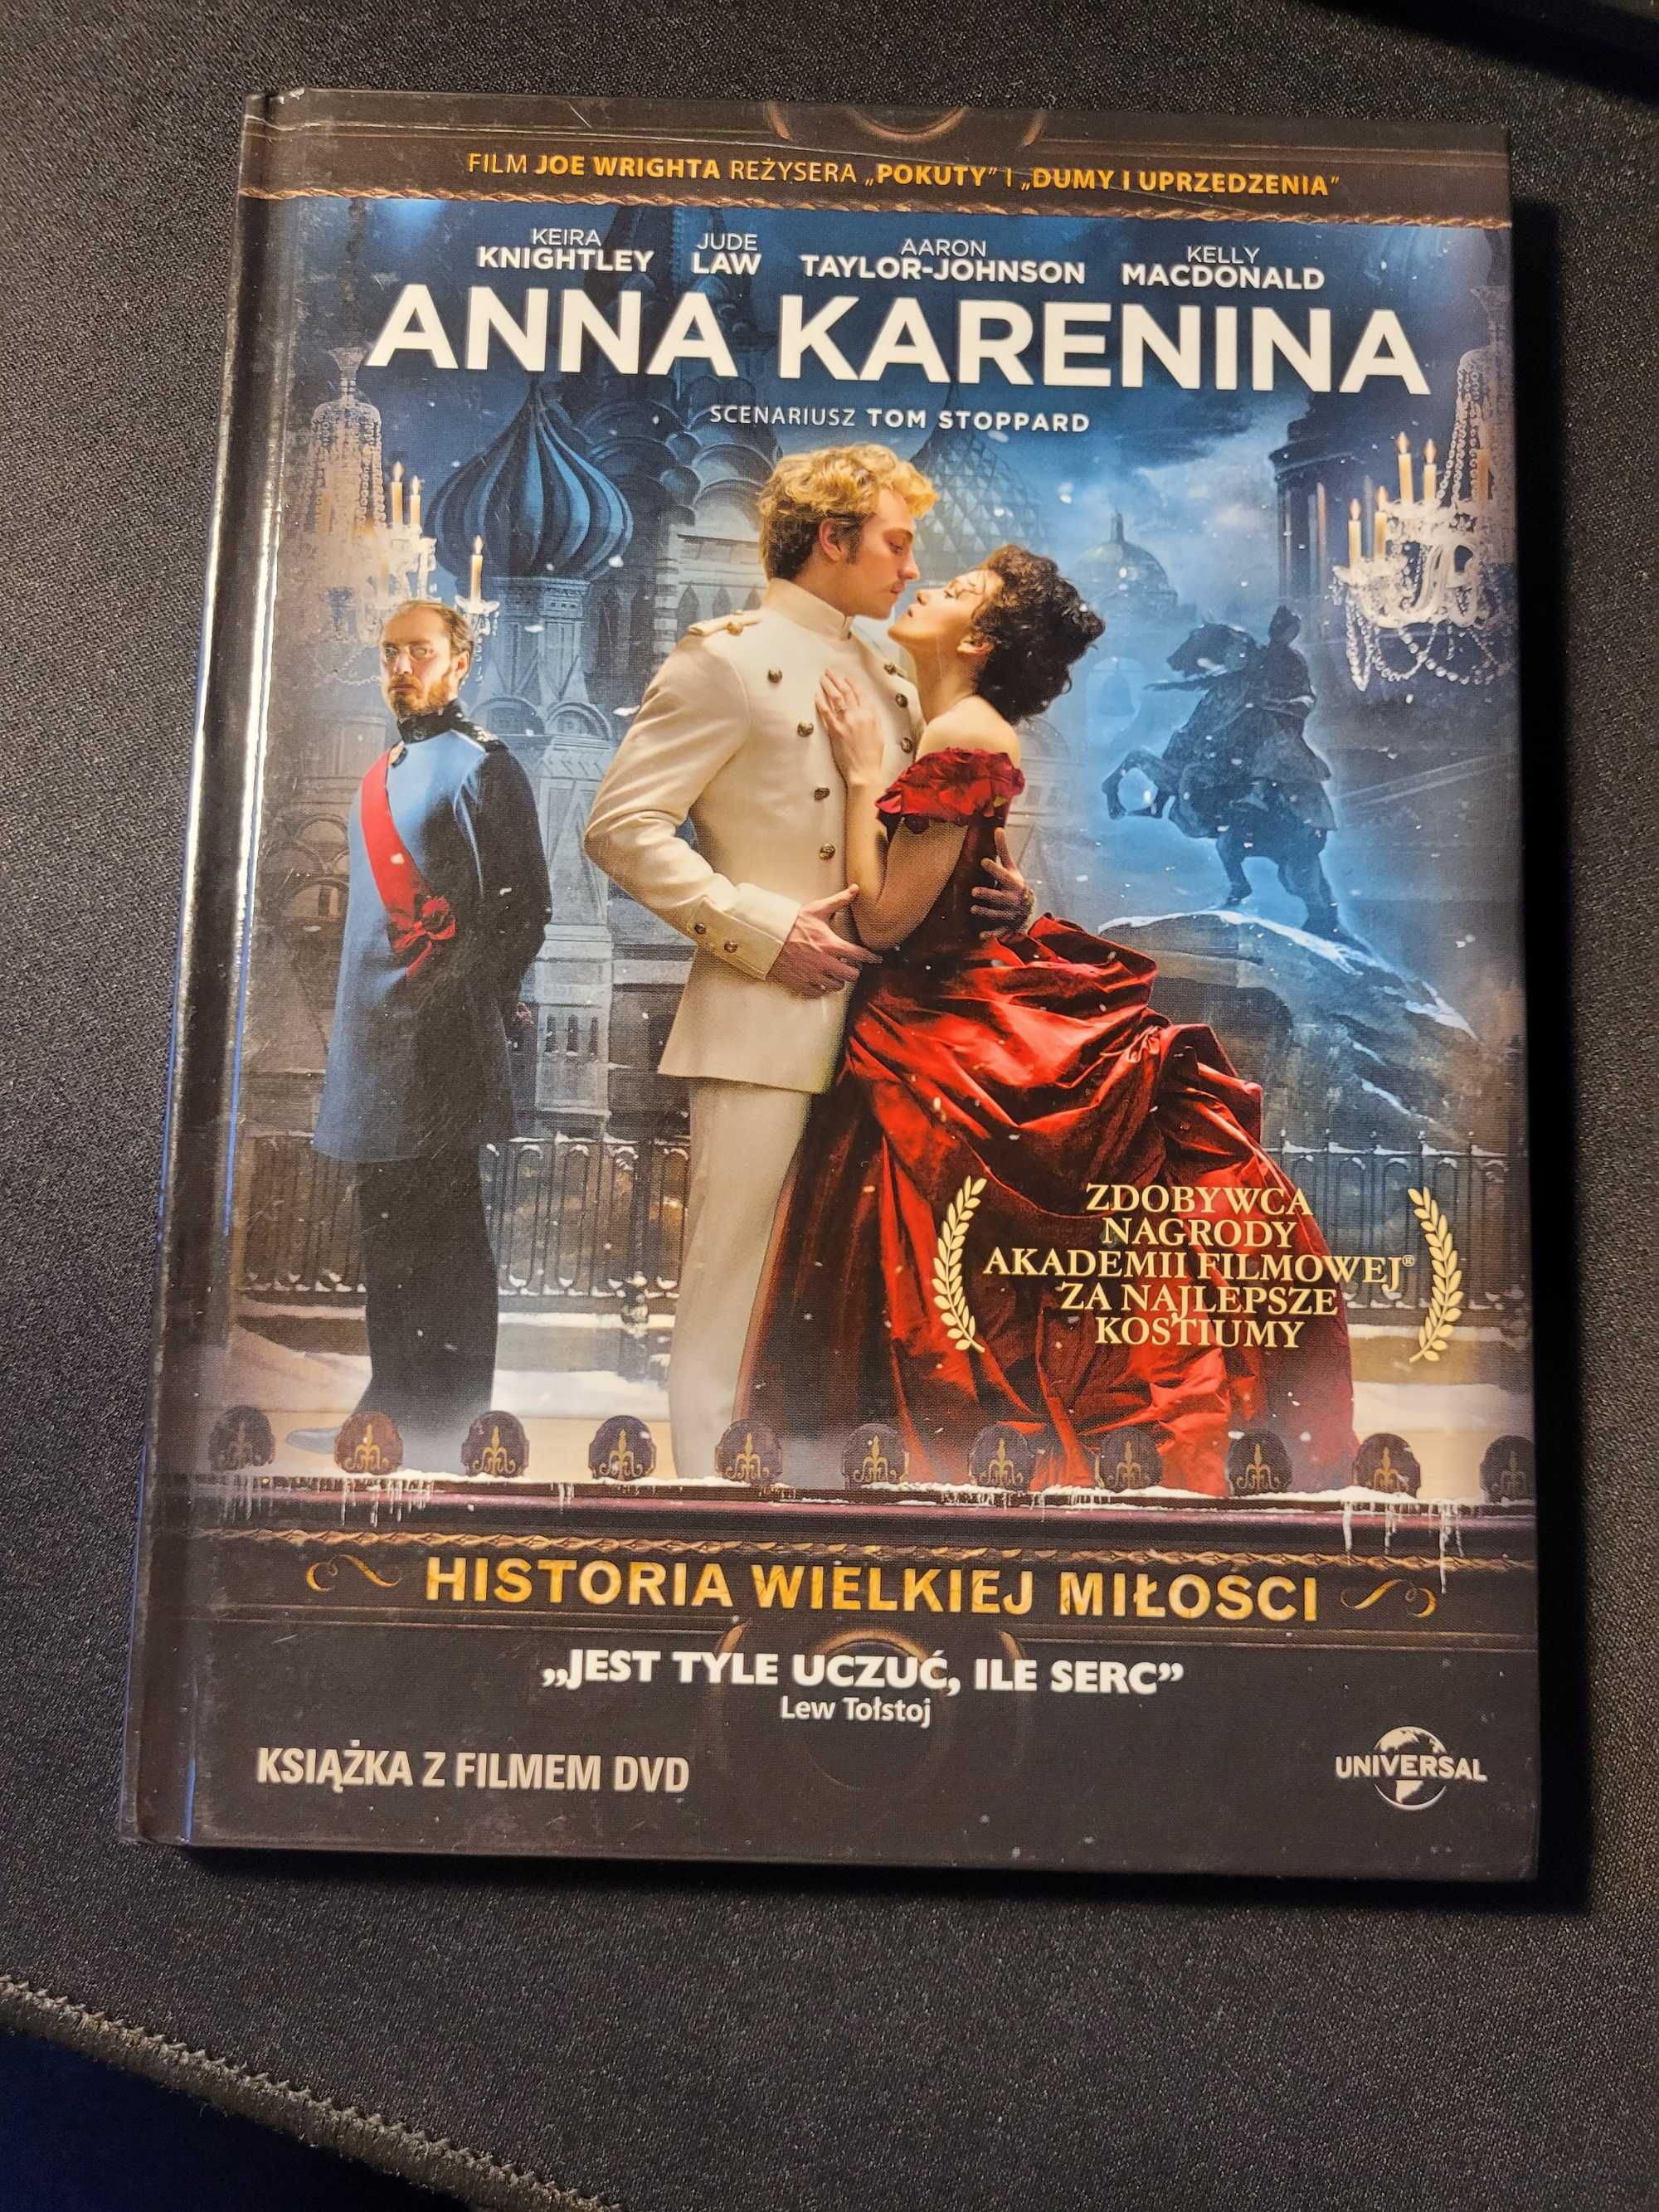 Film "Anna Karenina" DVD